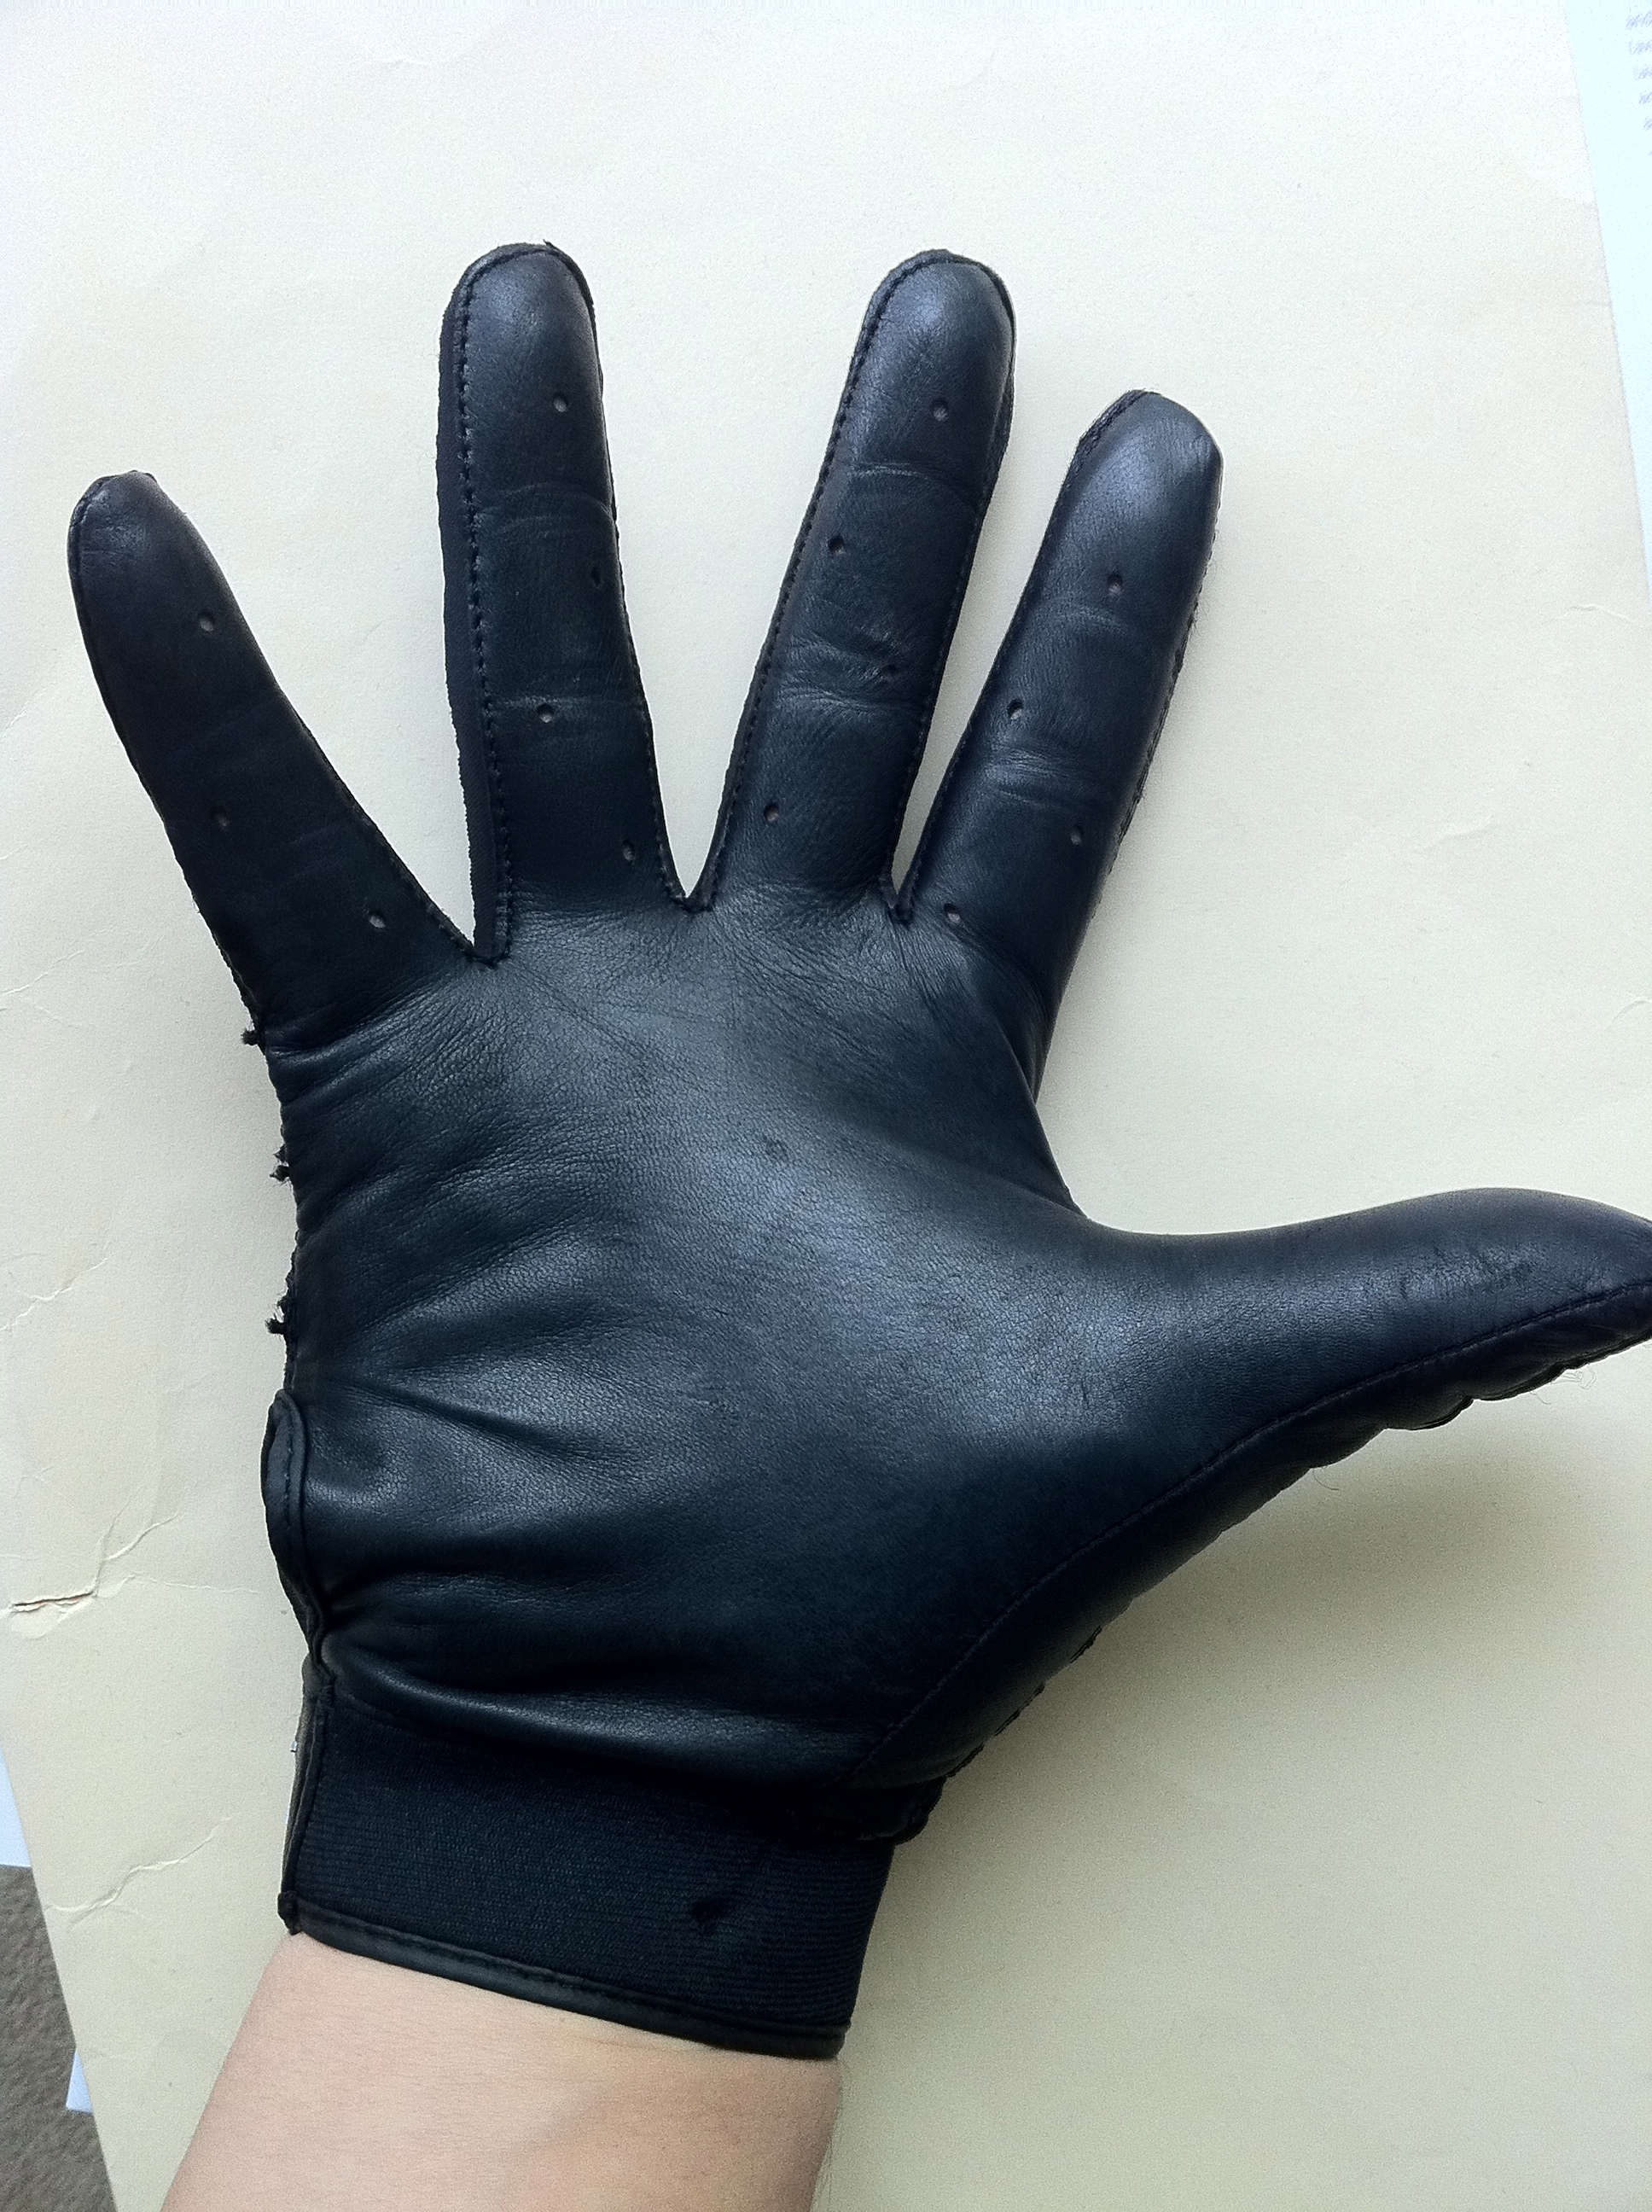 reebok crossfit gloves review